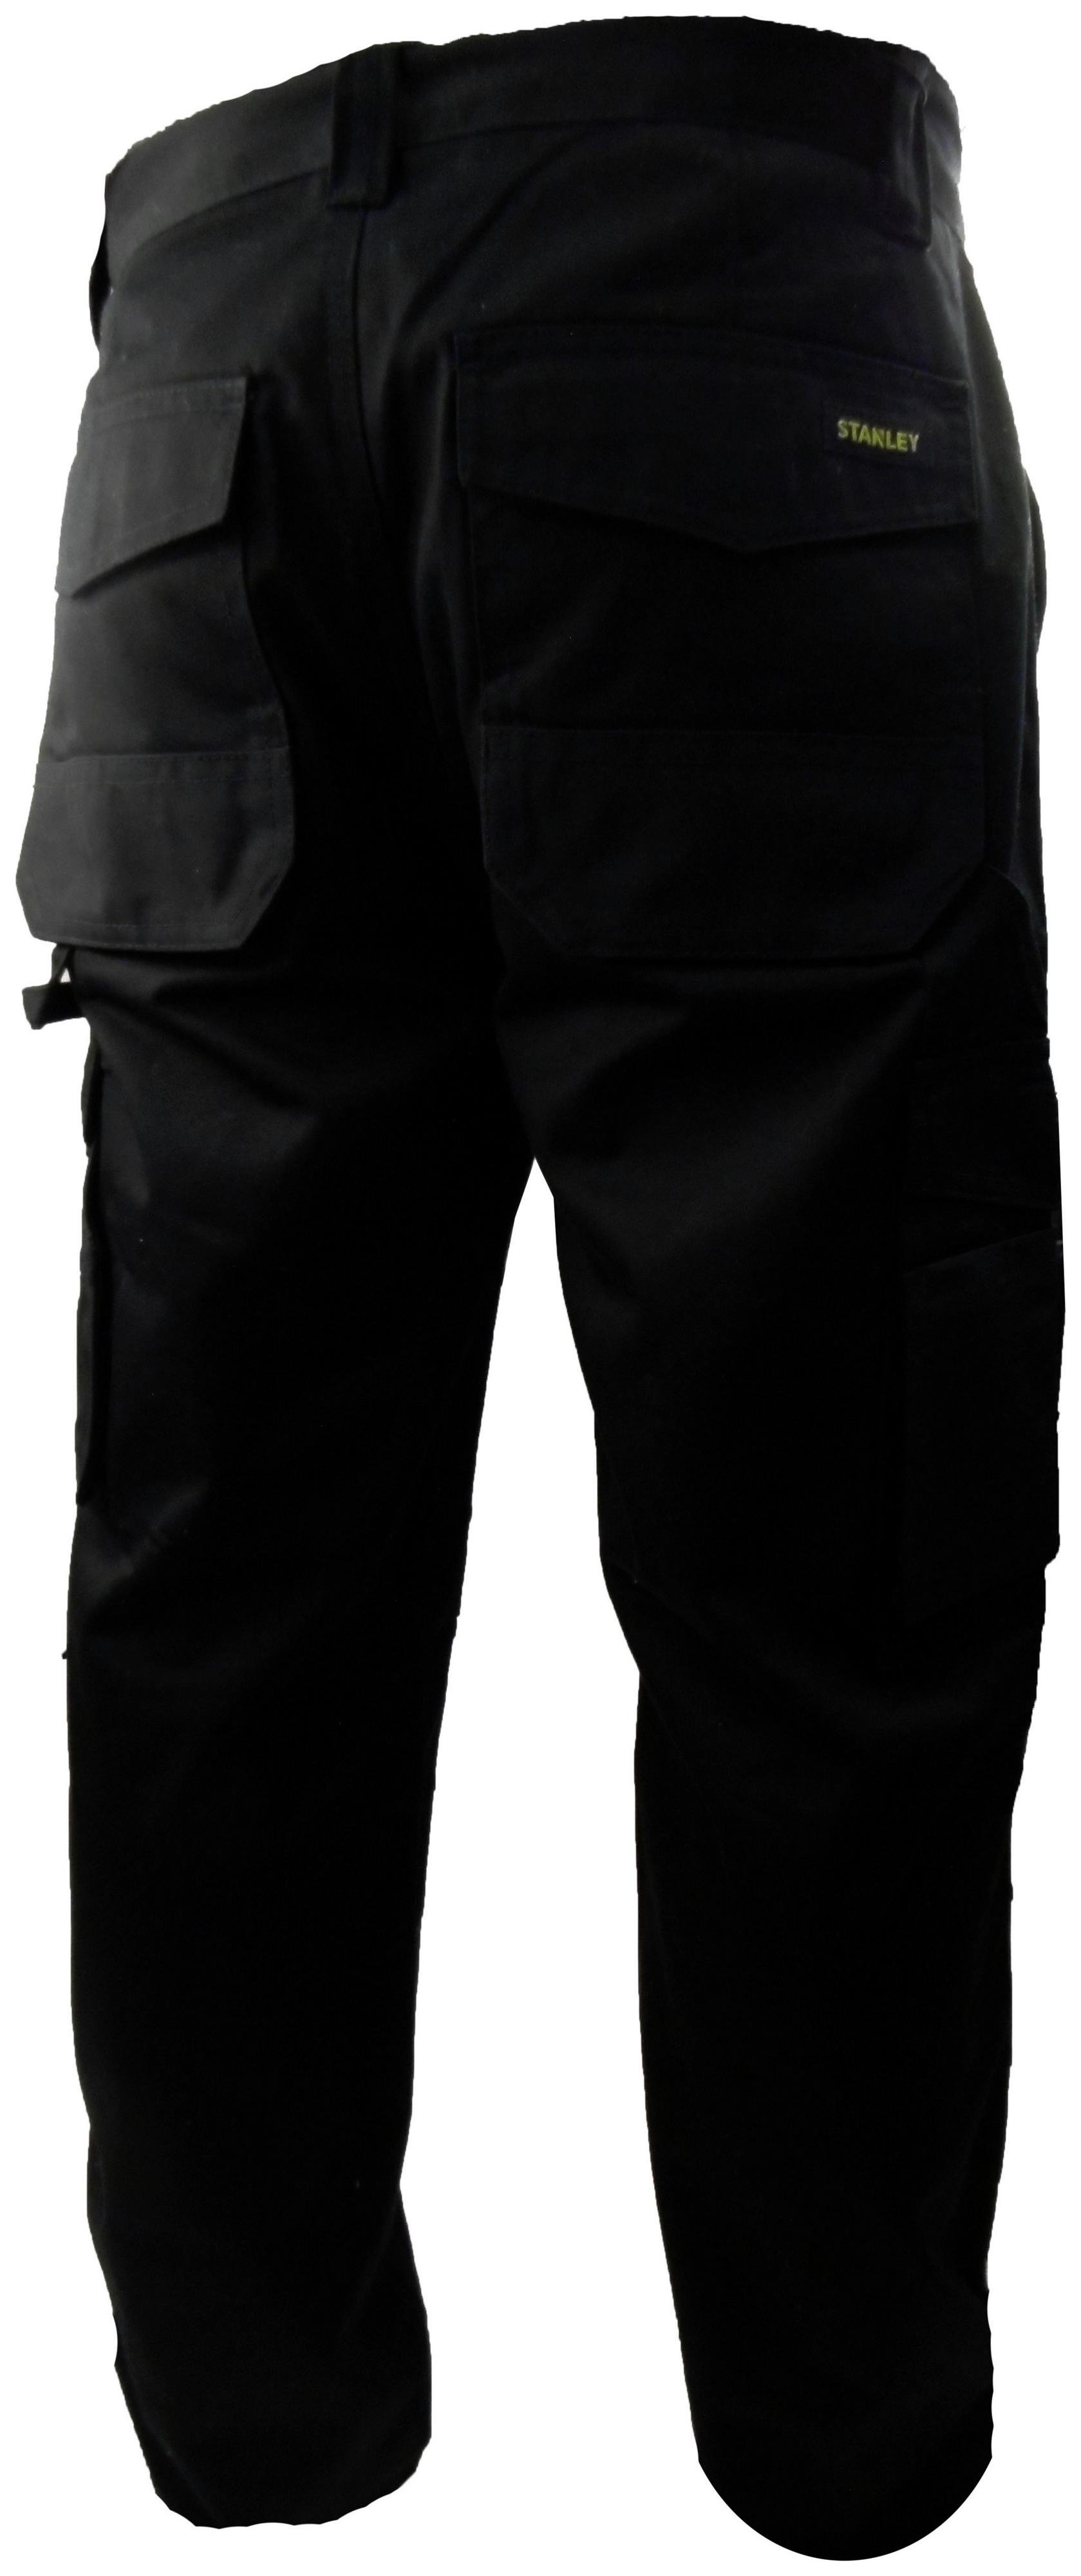 Stanley Phoenix Men's Black Trouser - 31 to 36 inch. Review